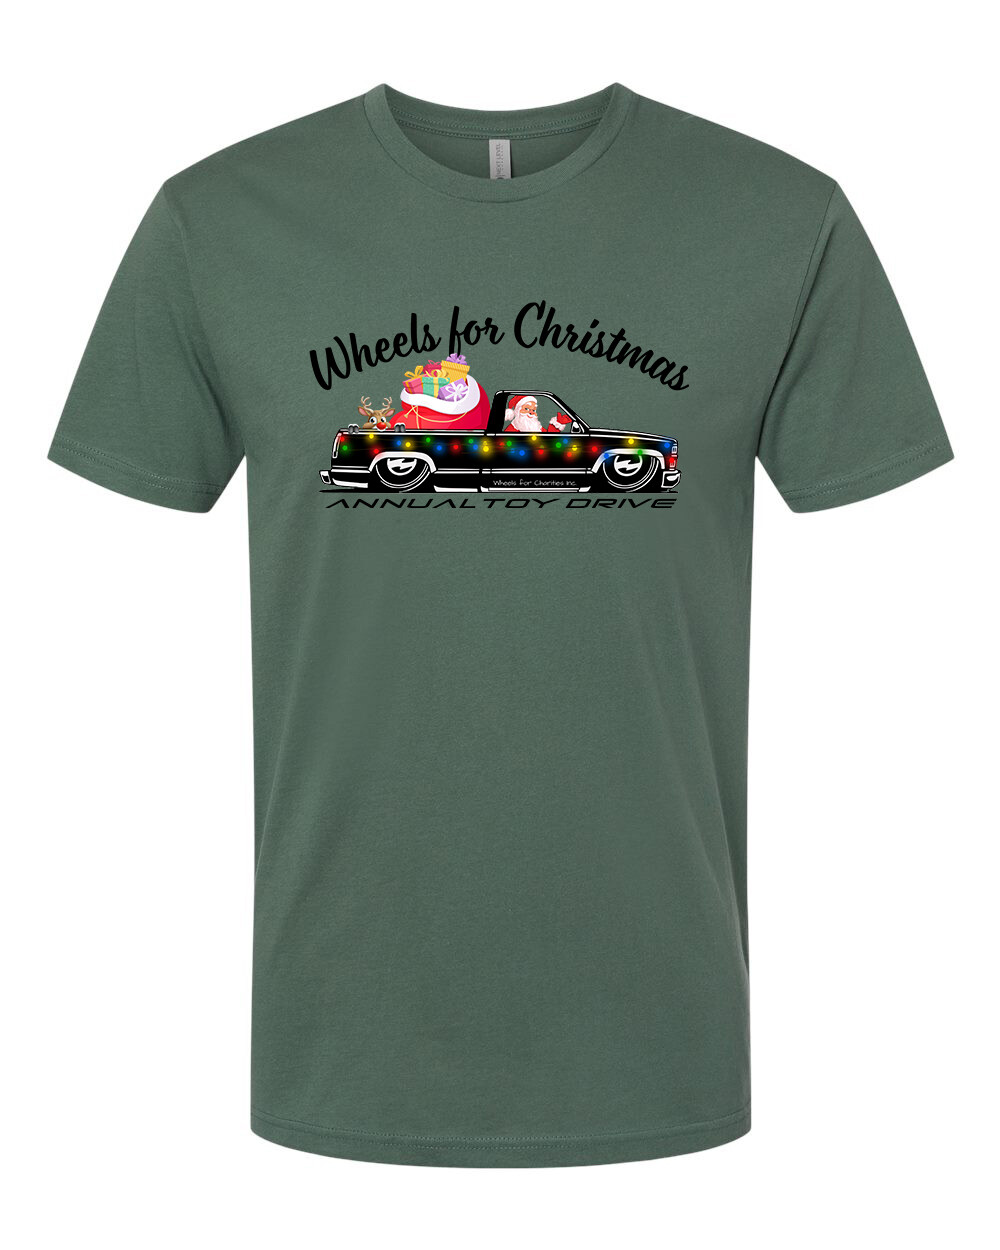 Wheels for Christmas T-shirts